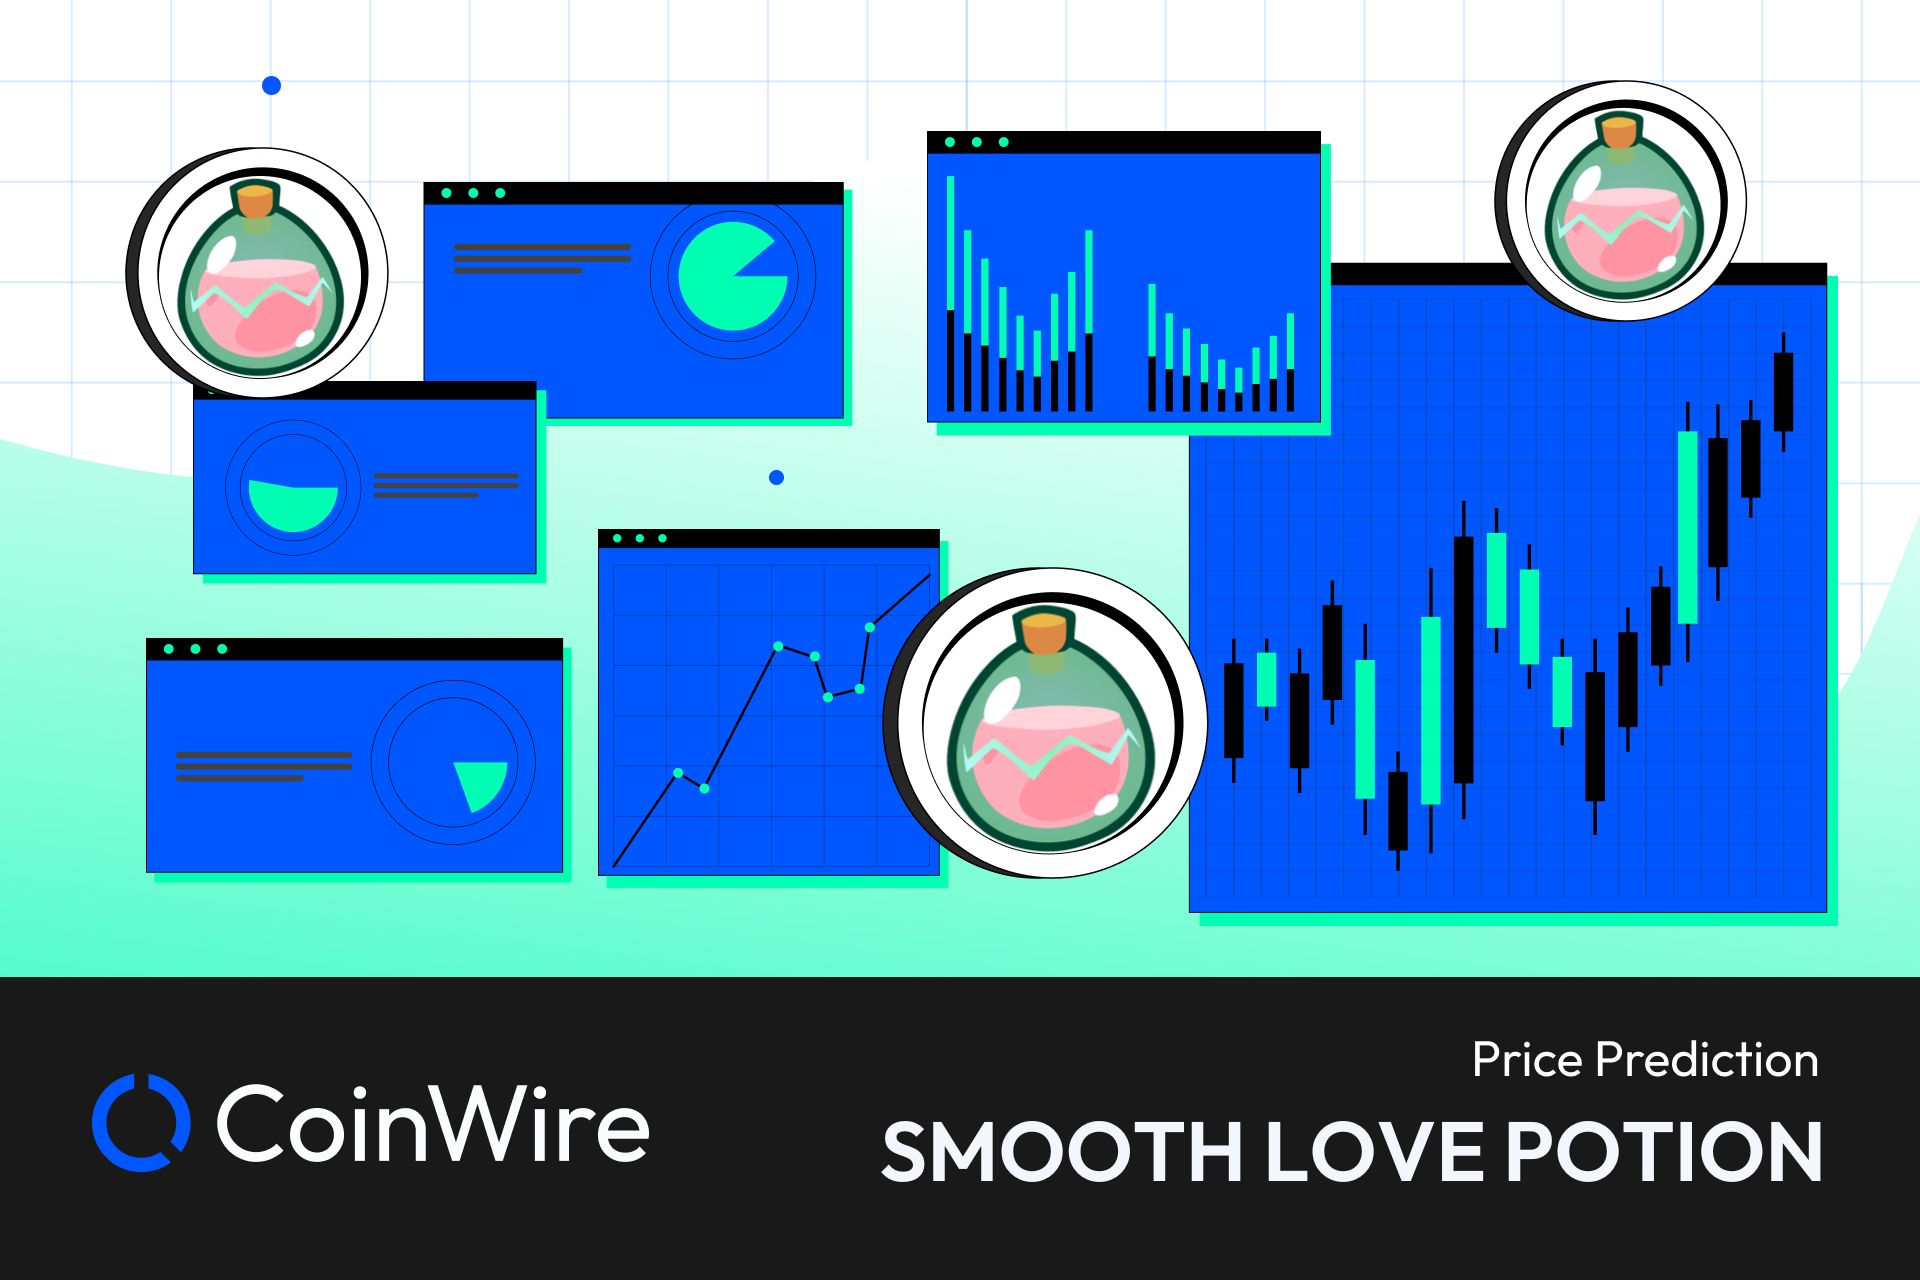 Smooth Love Potion Price Prediction